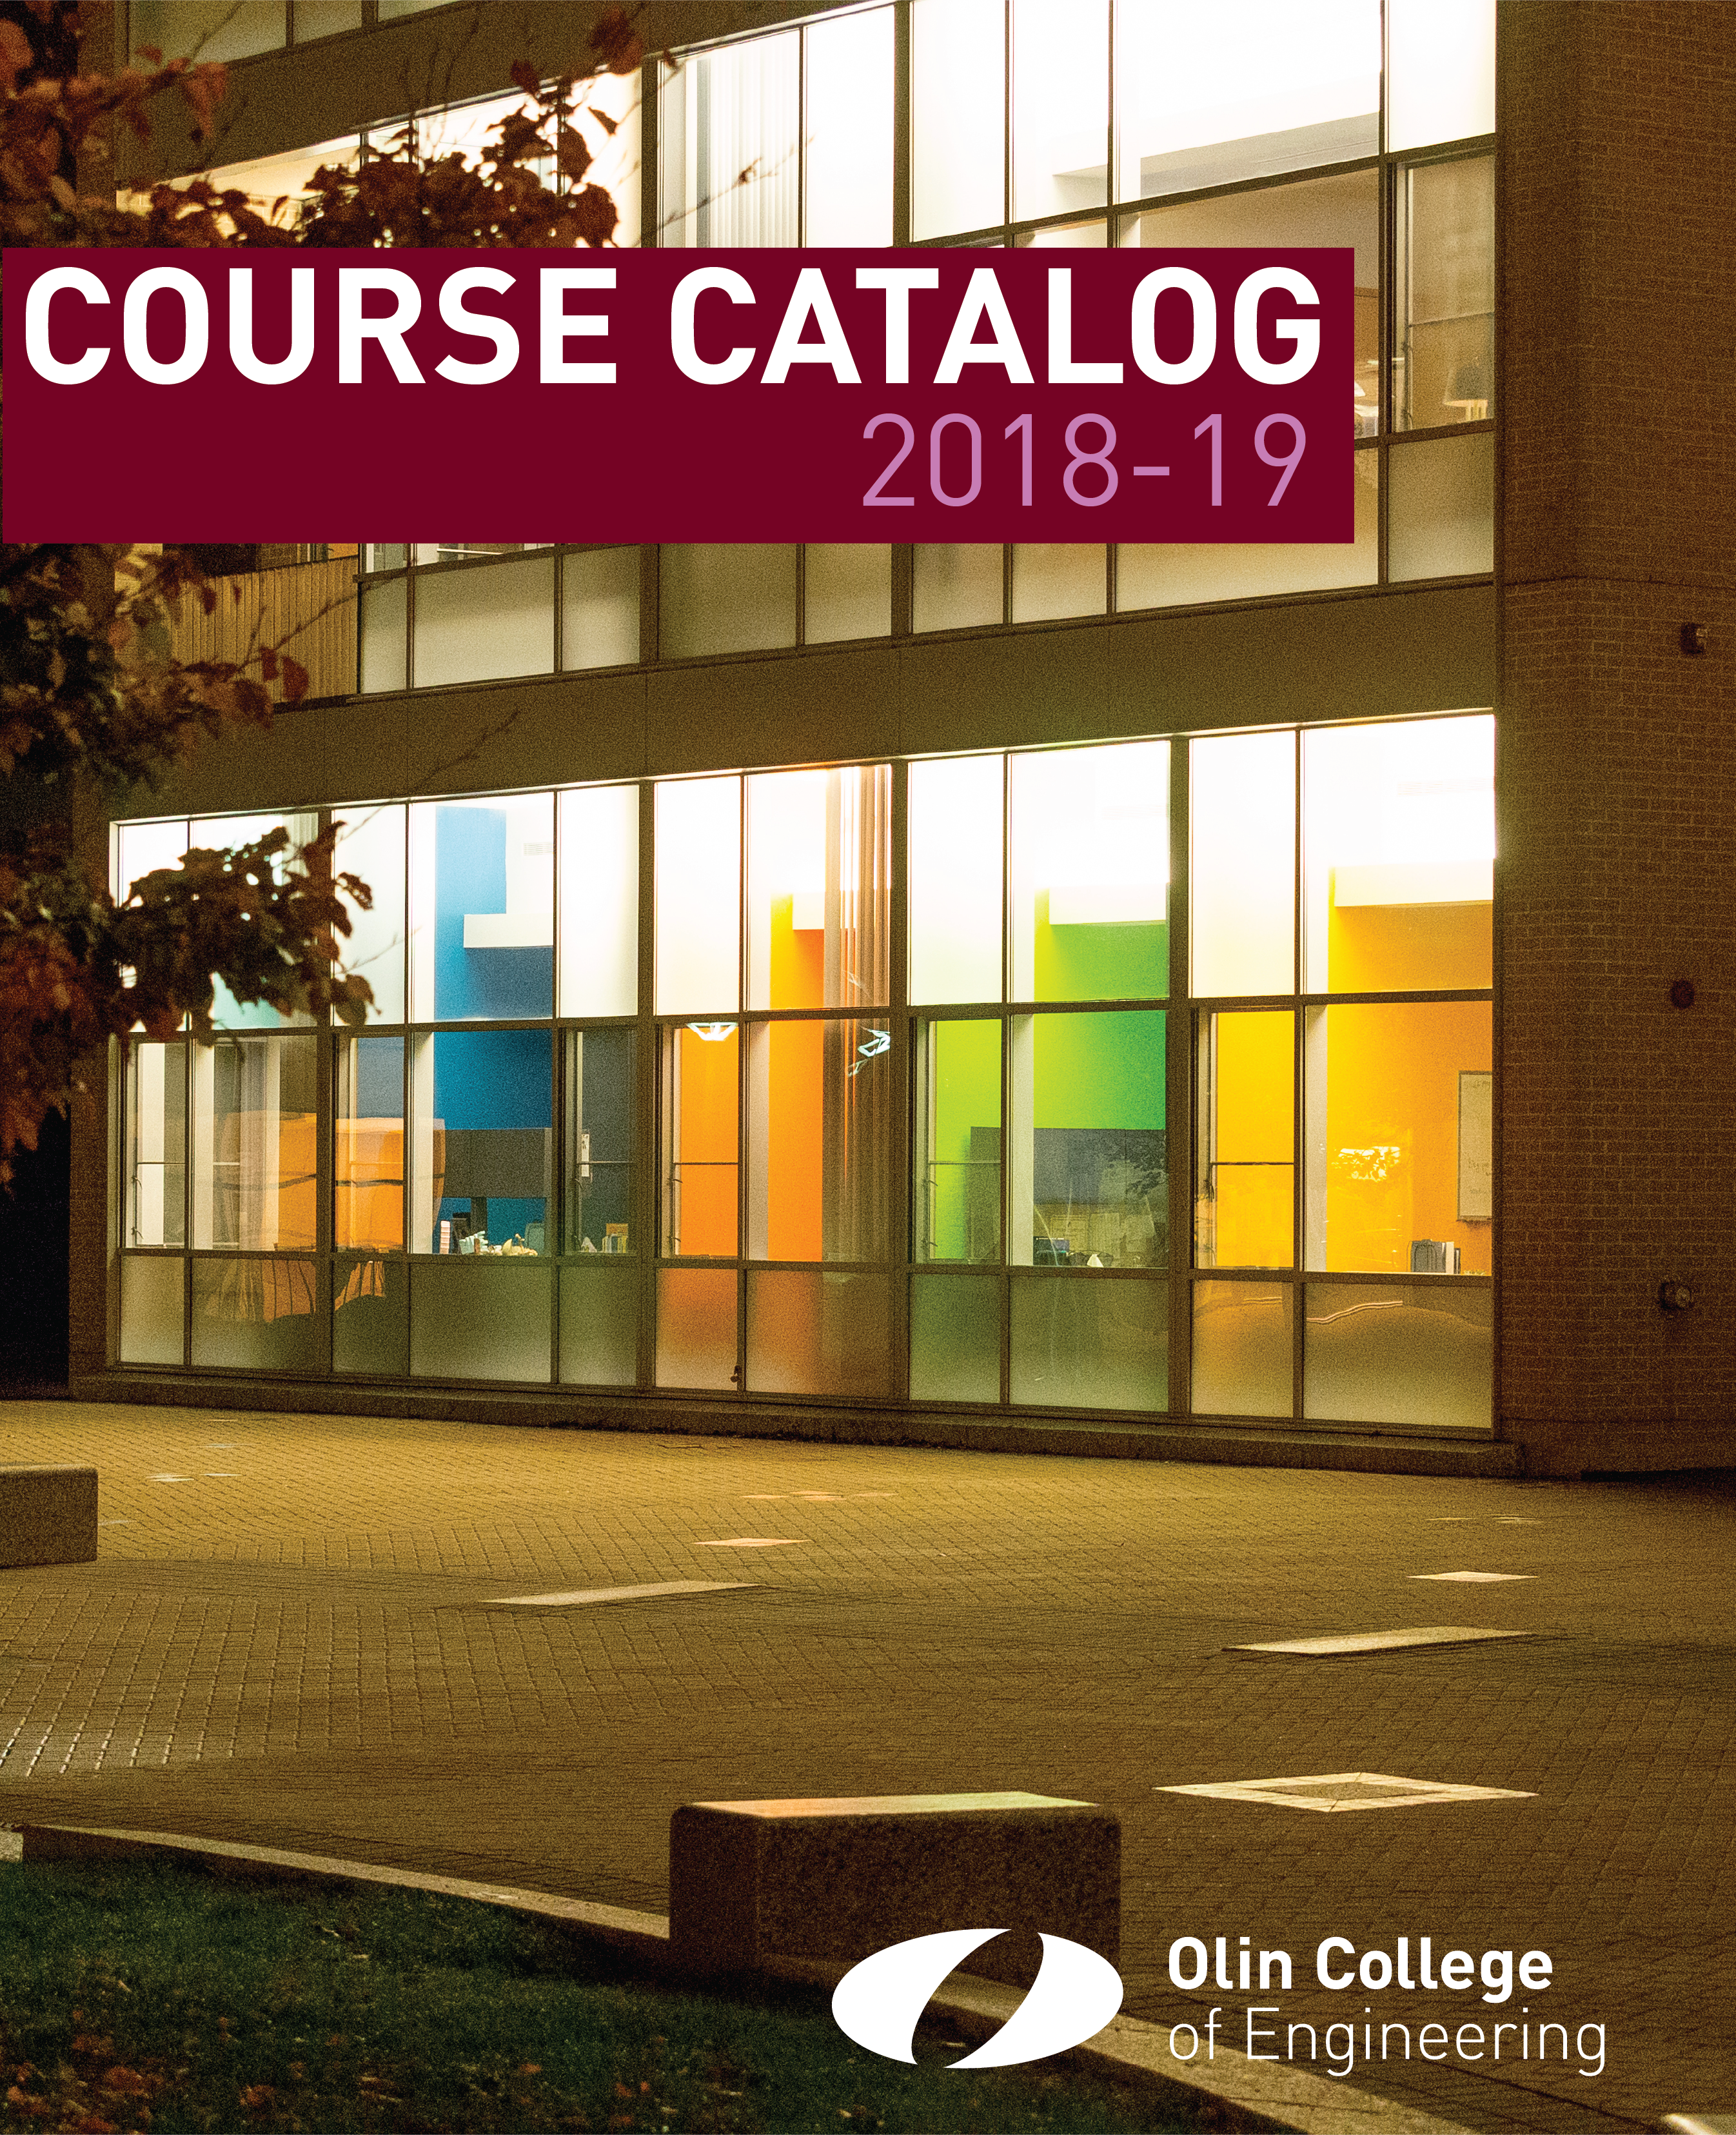 Course Catalog 2018-19